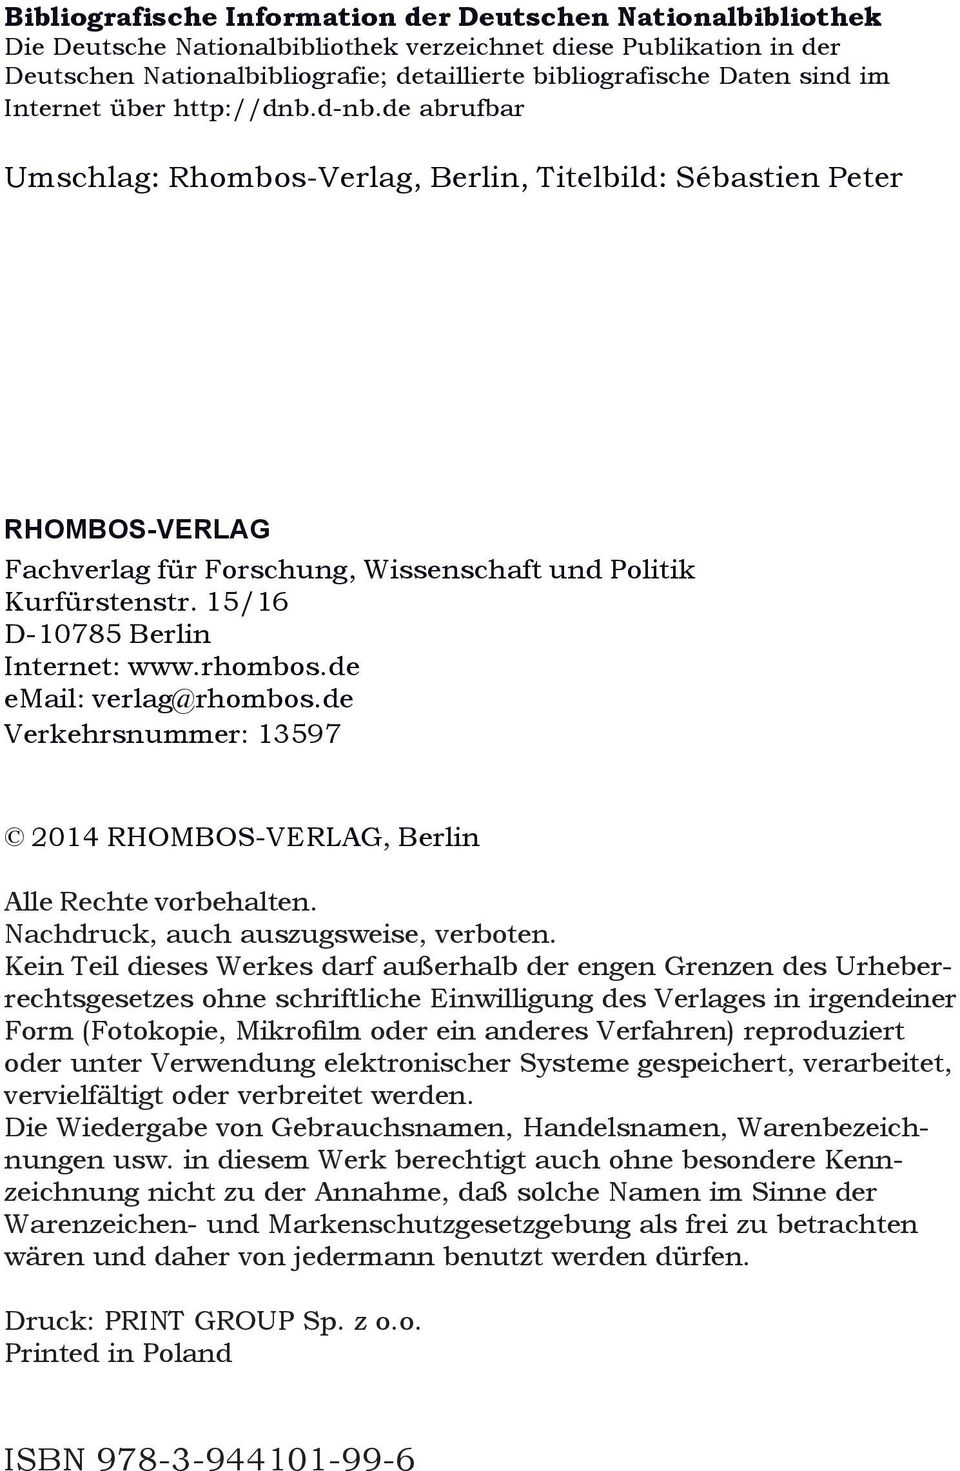 15/16 D-10785 Berlin Internet: www.rhombos.de email: verlag@rhombos.de Verkehrsnummer: 13597 2014 RHOMBOS-VERLAG, Berlin Alle Rechte vorbehalten. Nachdruck, auch auszugsweise, verboten.